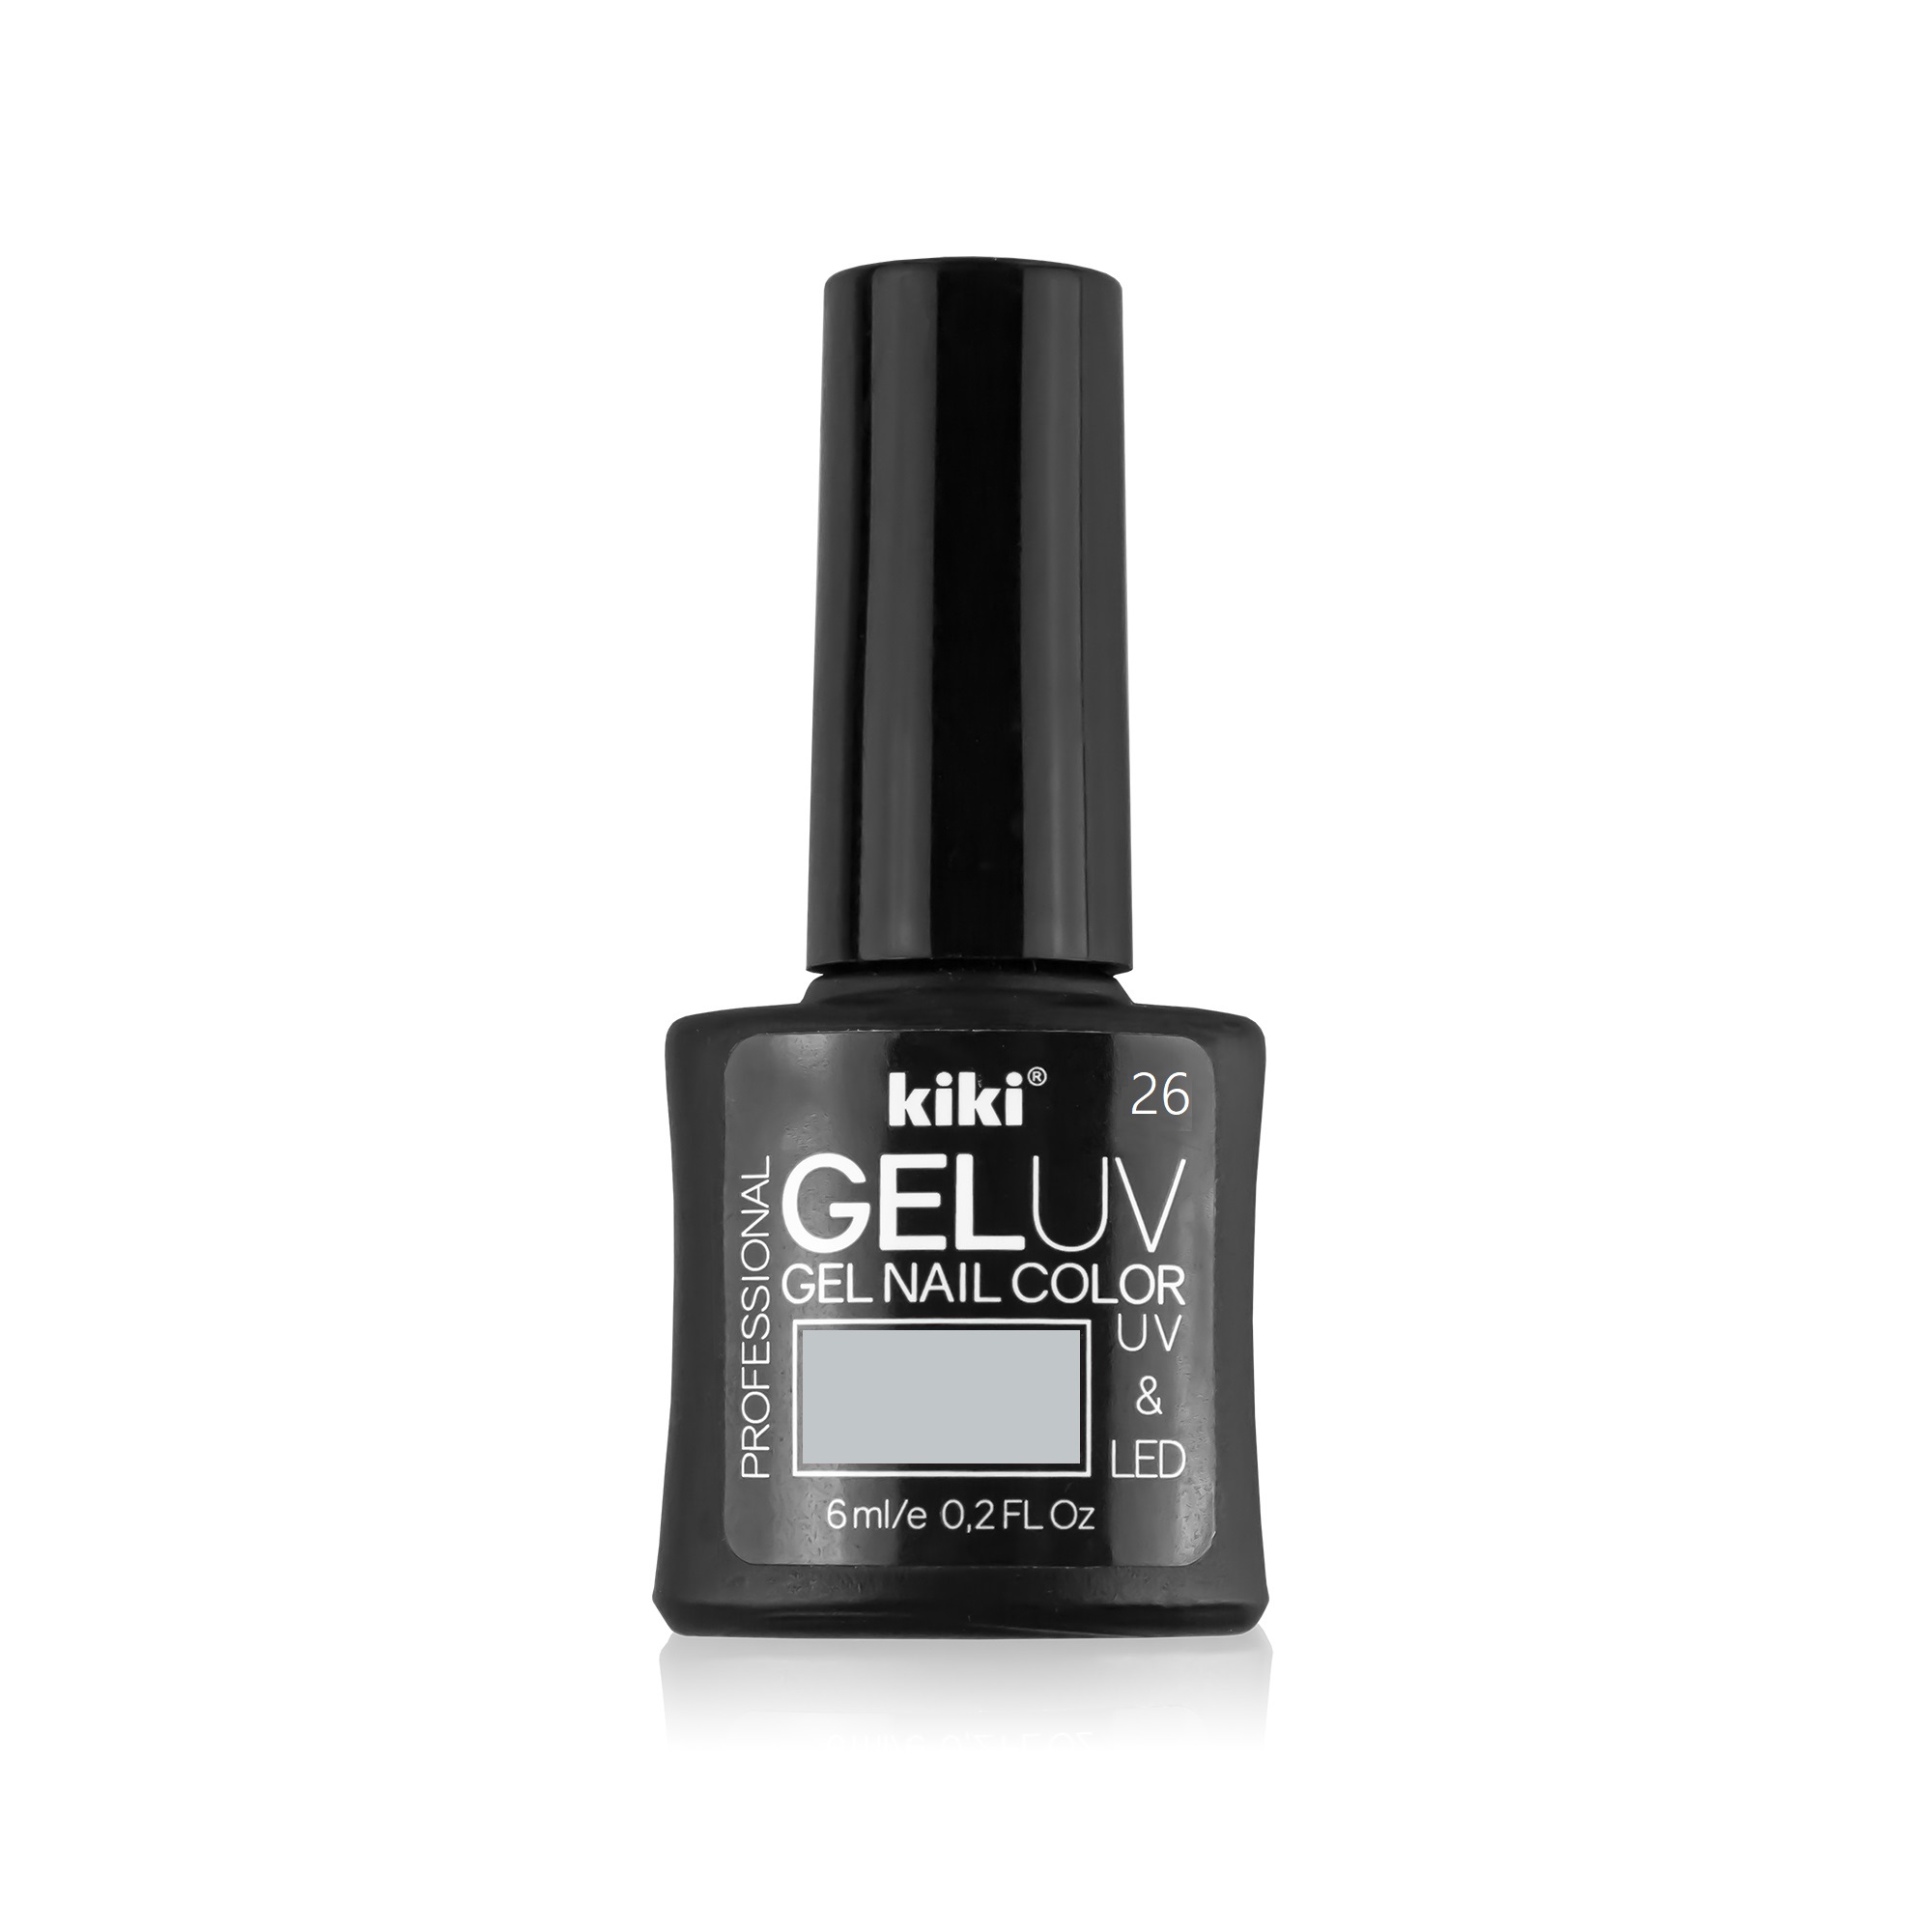 Гель-лак для ногтей Kiki Gel Uv&Led 26 светло-серый kiki лак для ногтей gel effect